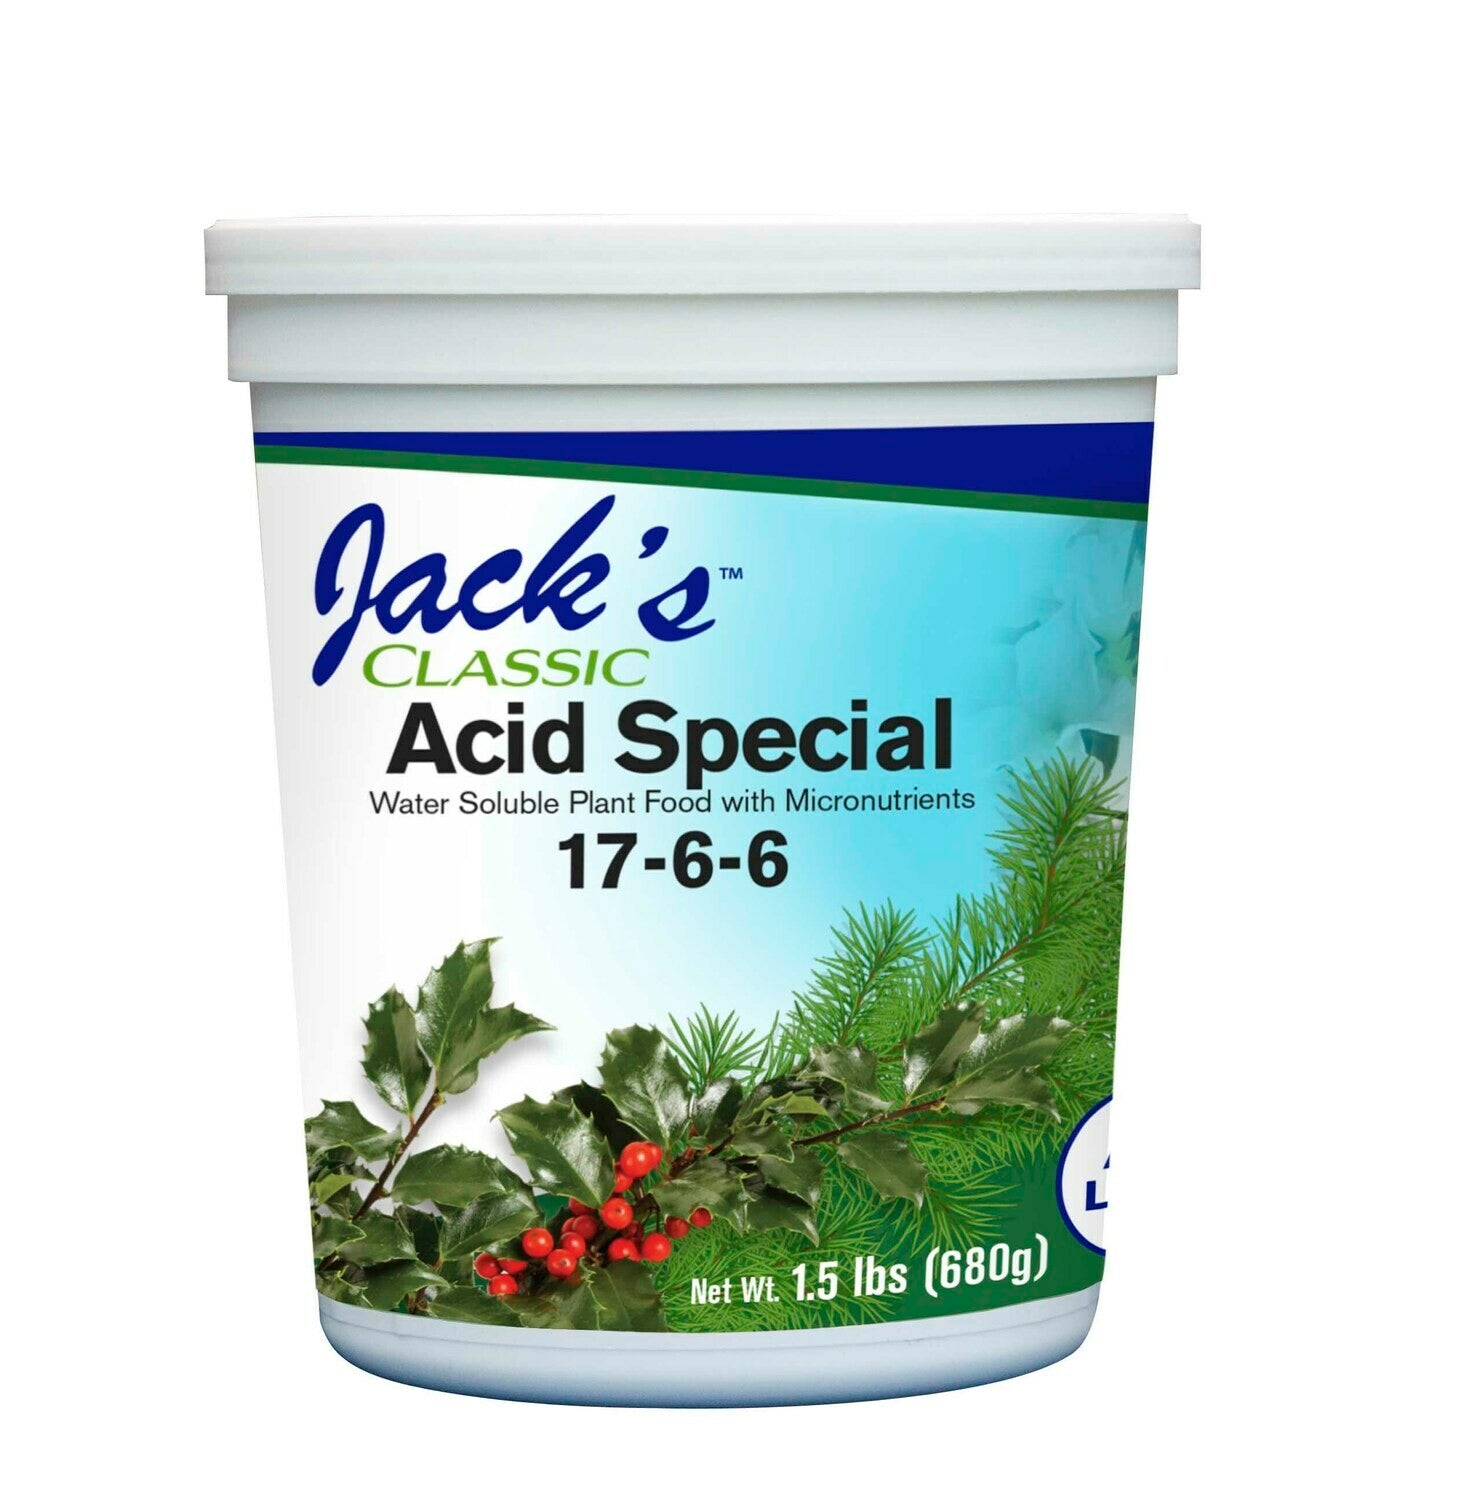 A great water soluble acid loving fertilizer